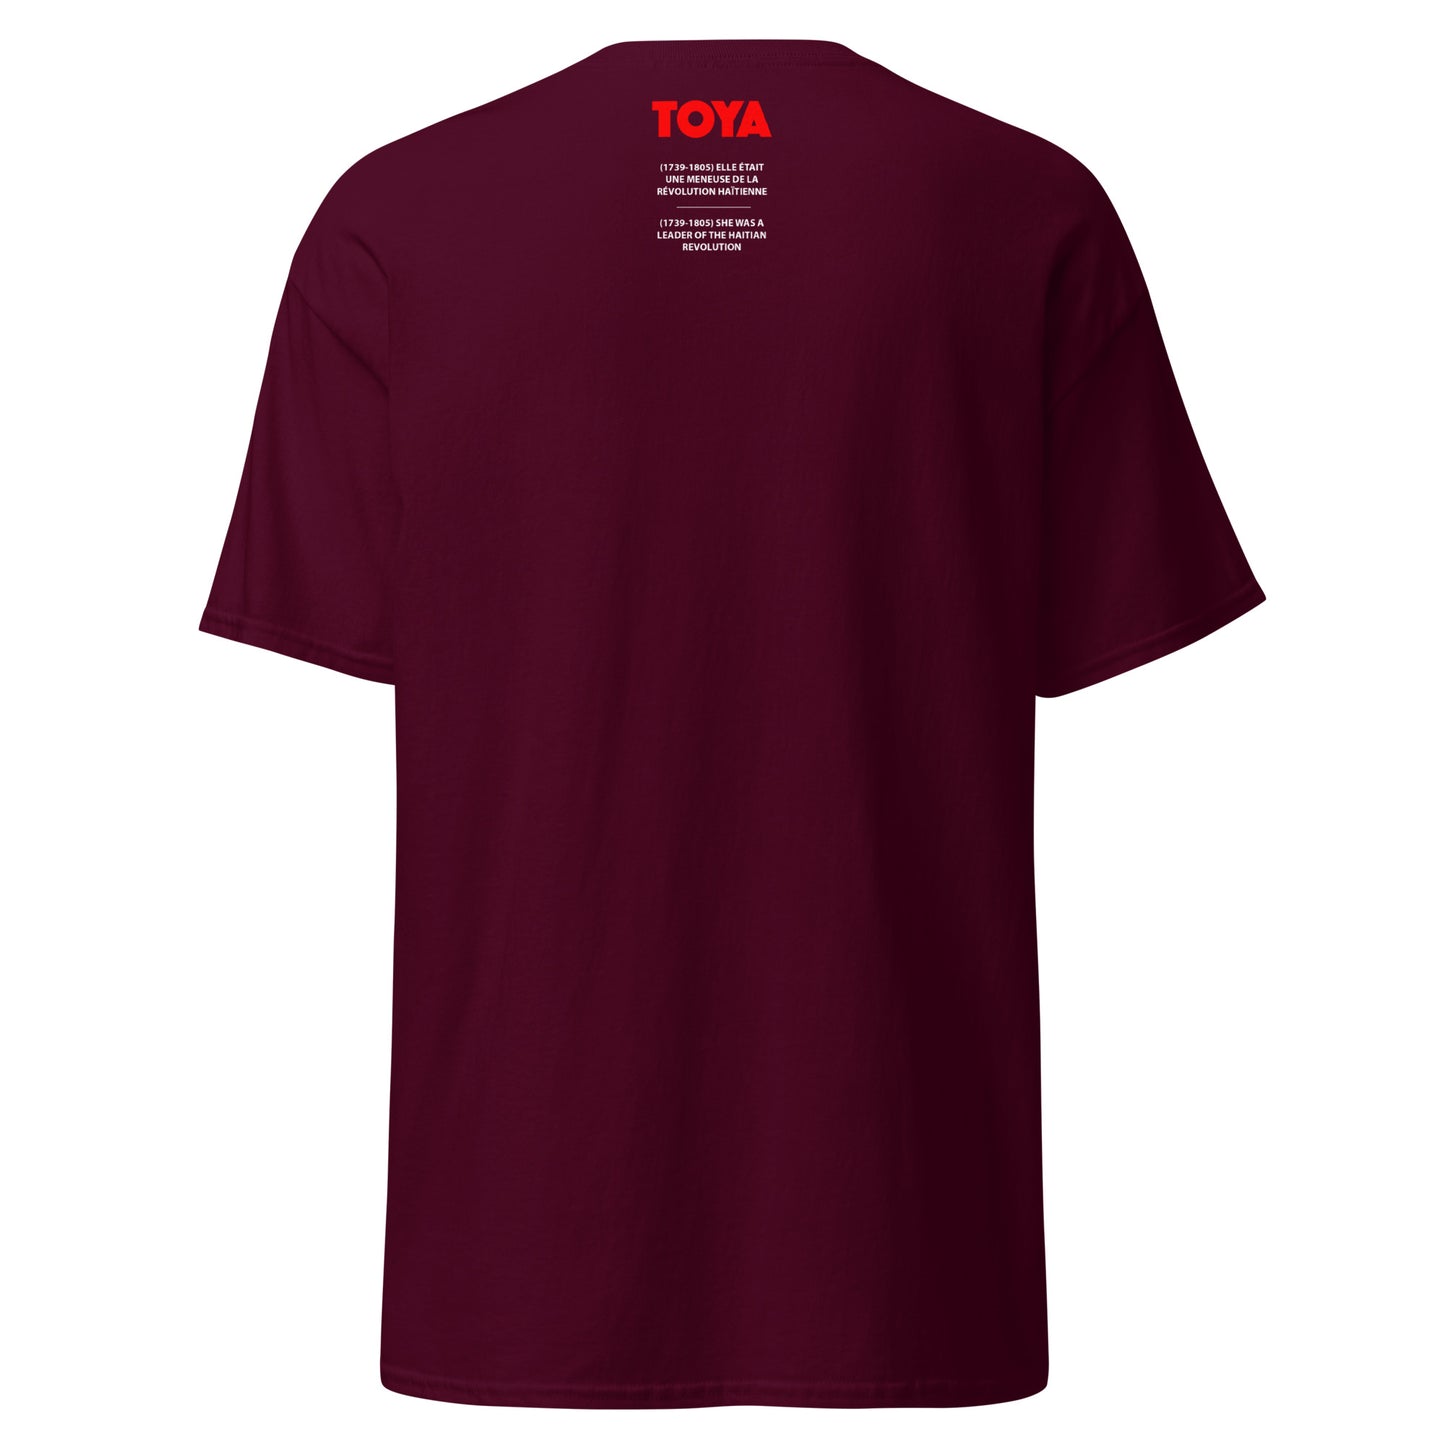 TOYA (T-Shirt Cadre)